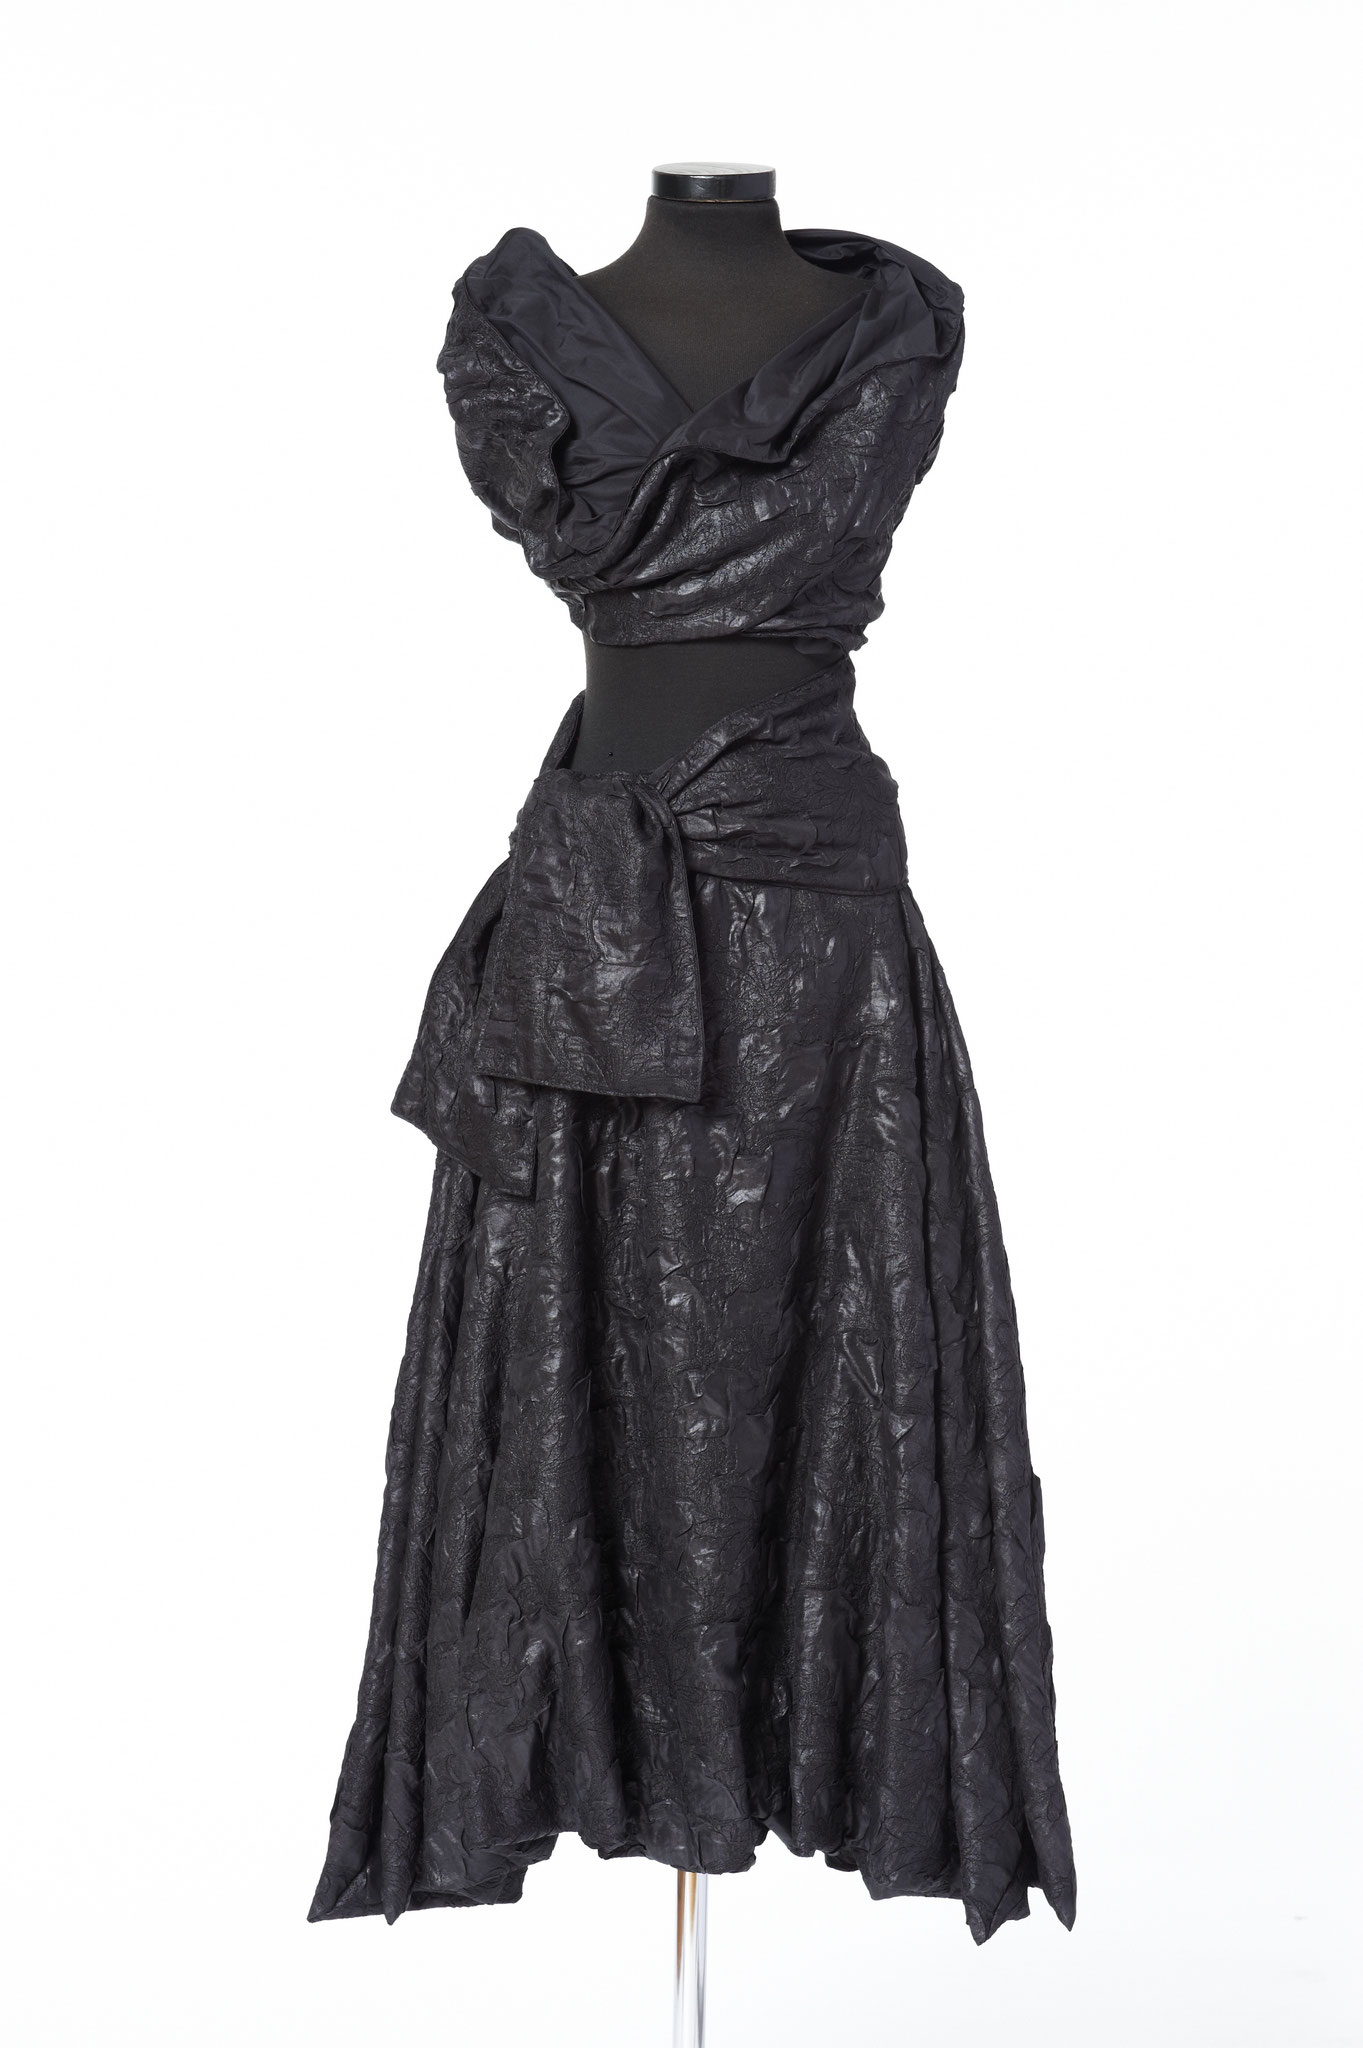 3-piece outfit: skirt, sash, top. Material: cotton/ viscose / microfibre